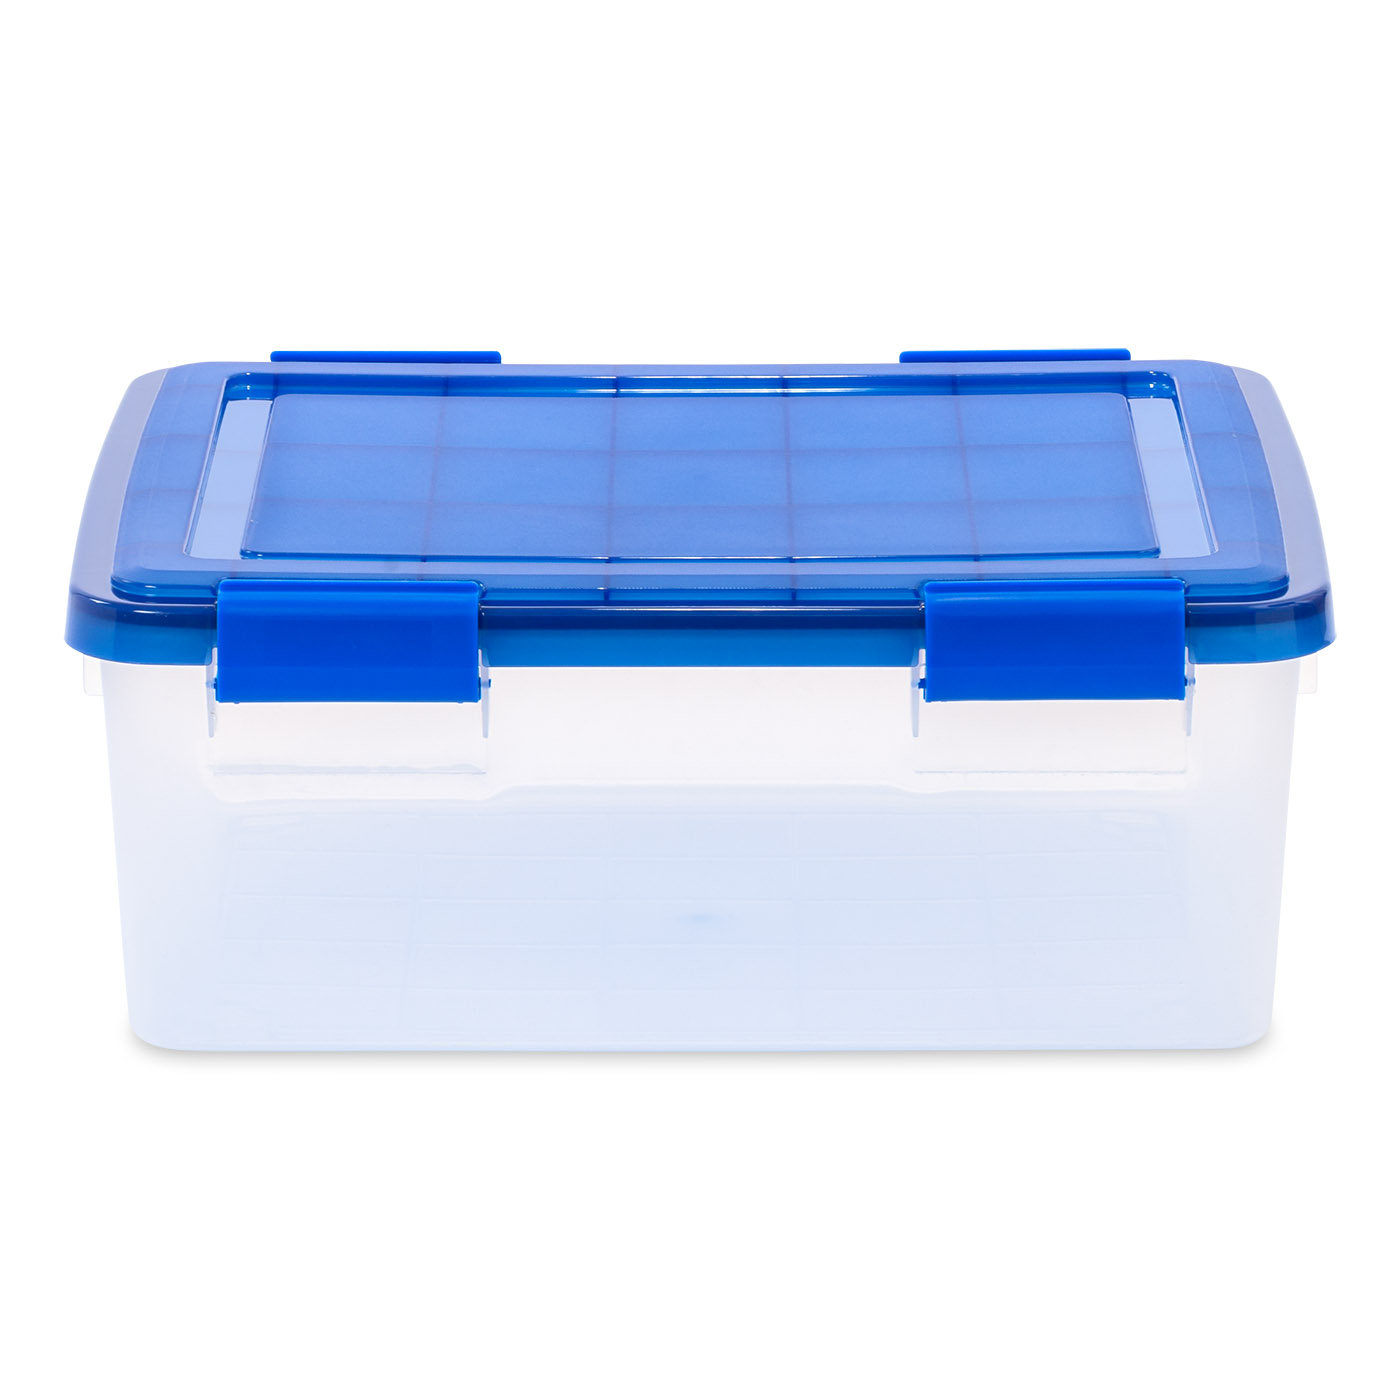 Sterilite Large Clear Flip Top Storage Box & Reviews - Wayfair Canada